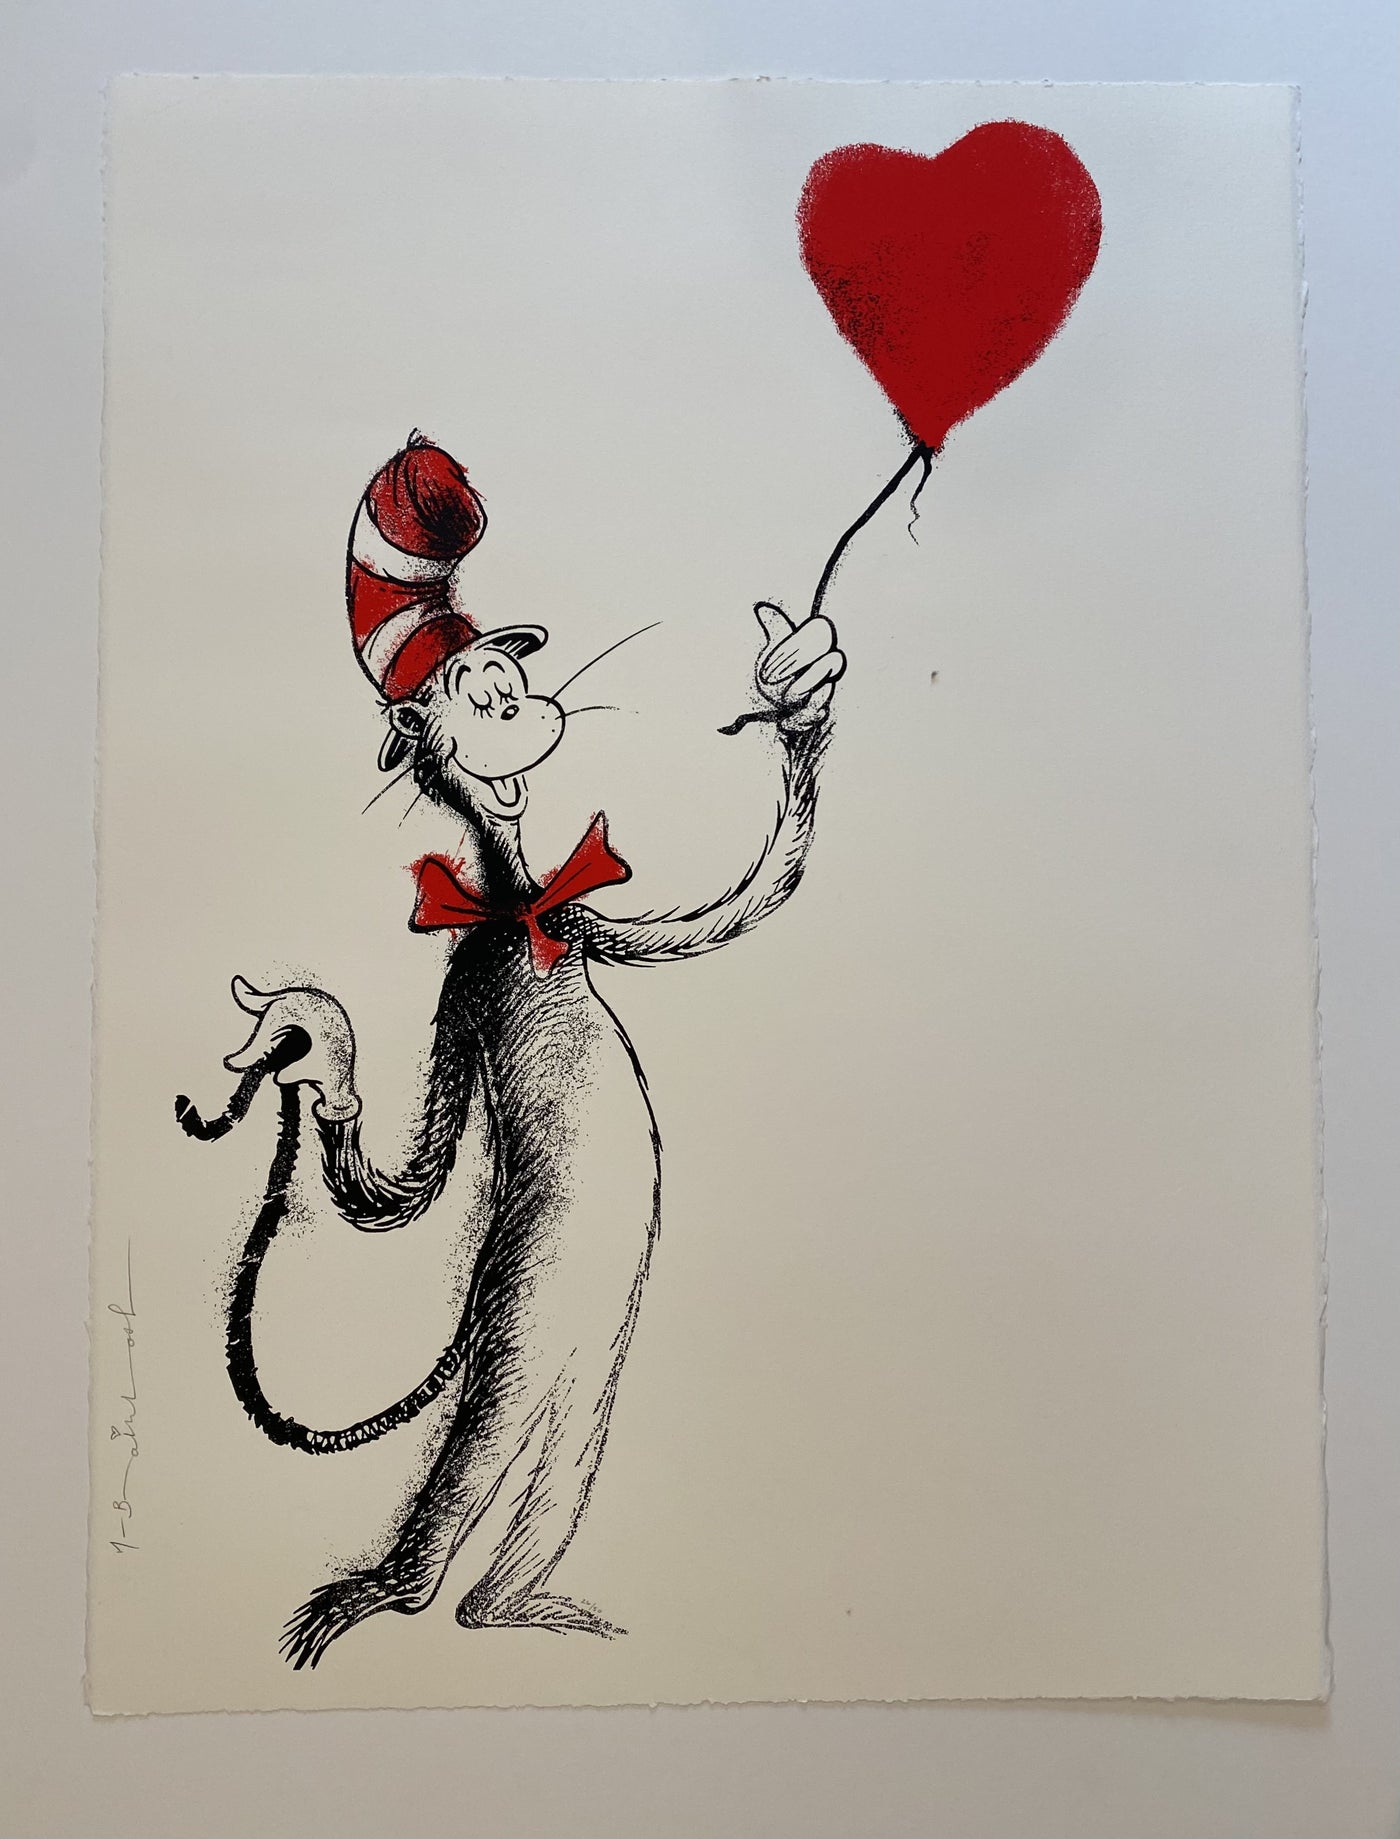 Mr. Brainwash The Cat in The Heart (Balloon)